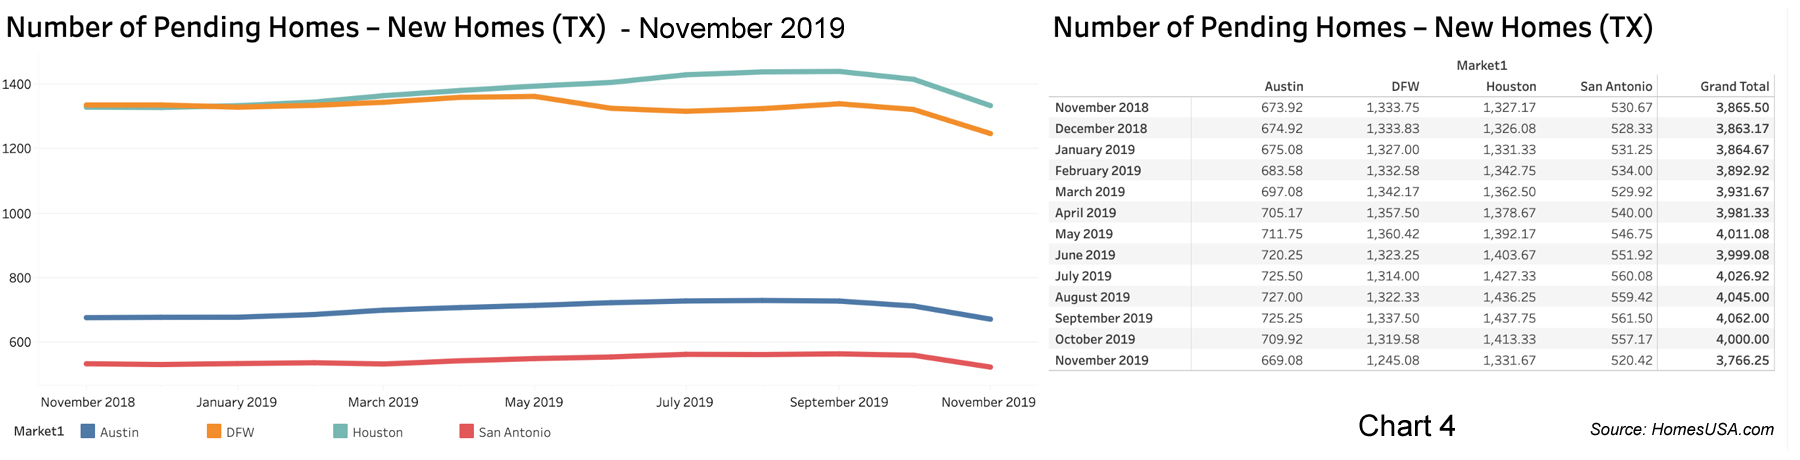 Chart 4: Texas Pending New Home Sales - November 2019